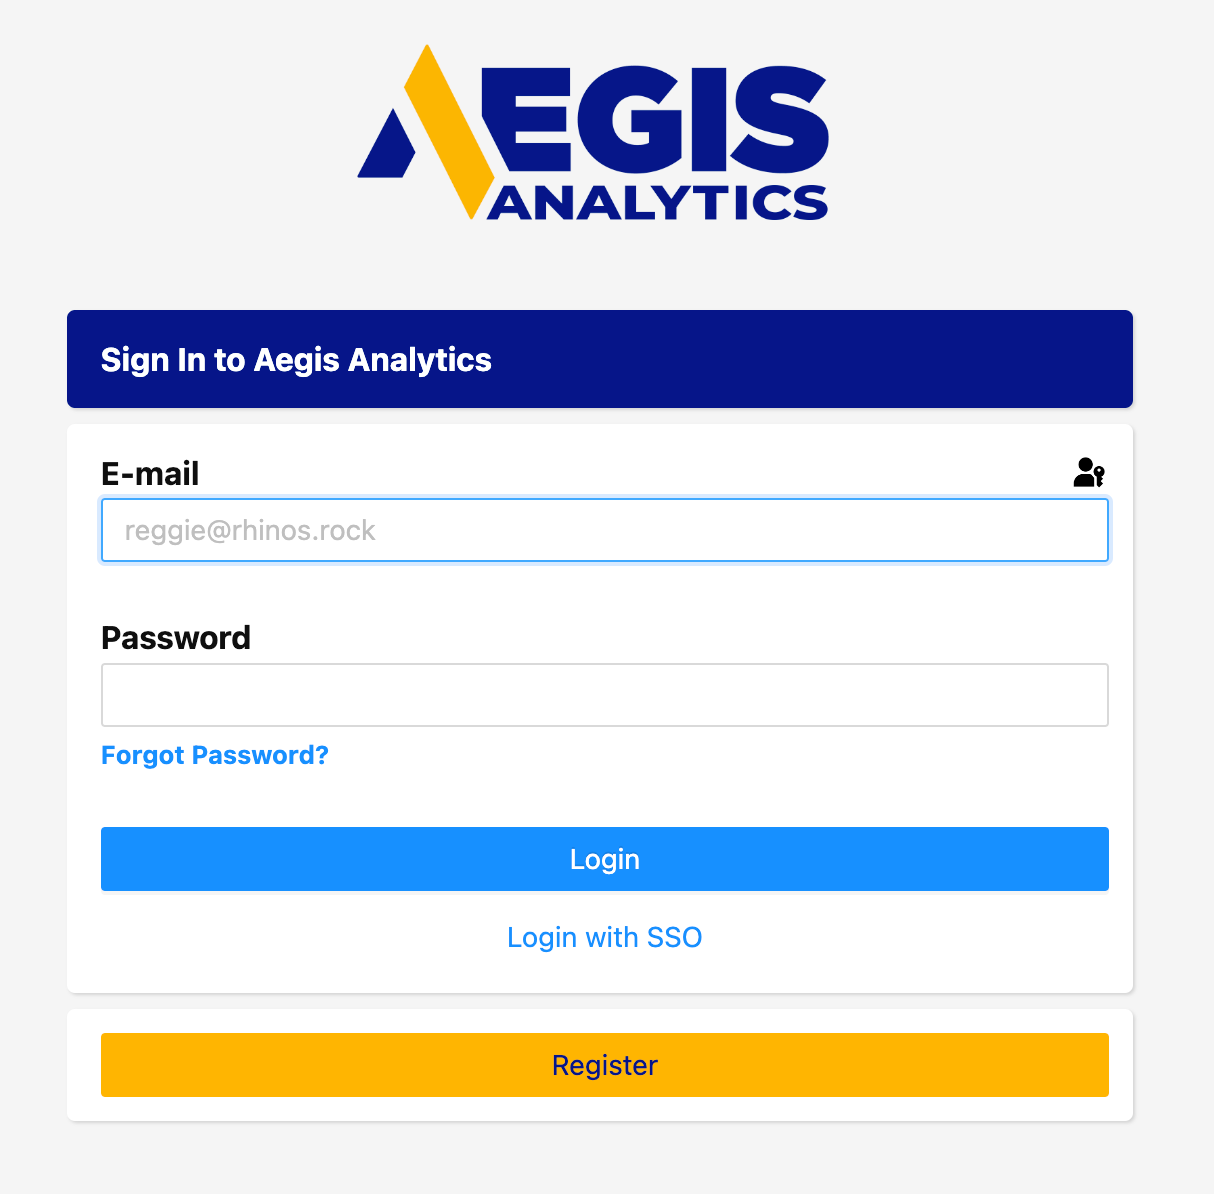 Aegis Analytics v4.0 - Release Notes